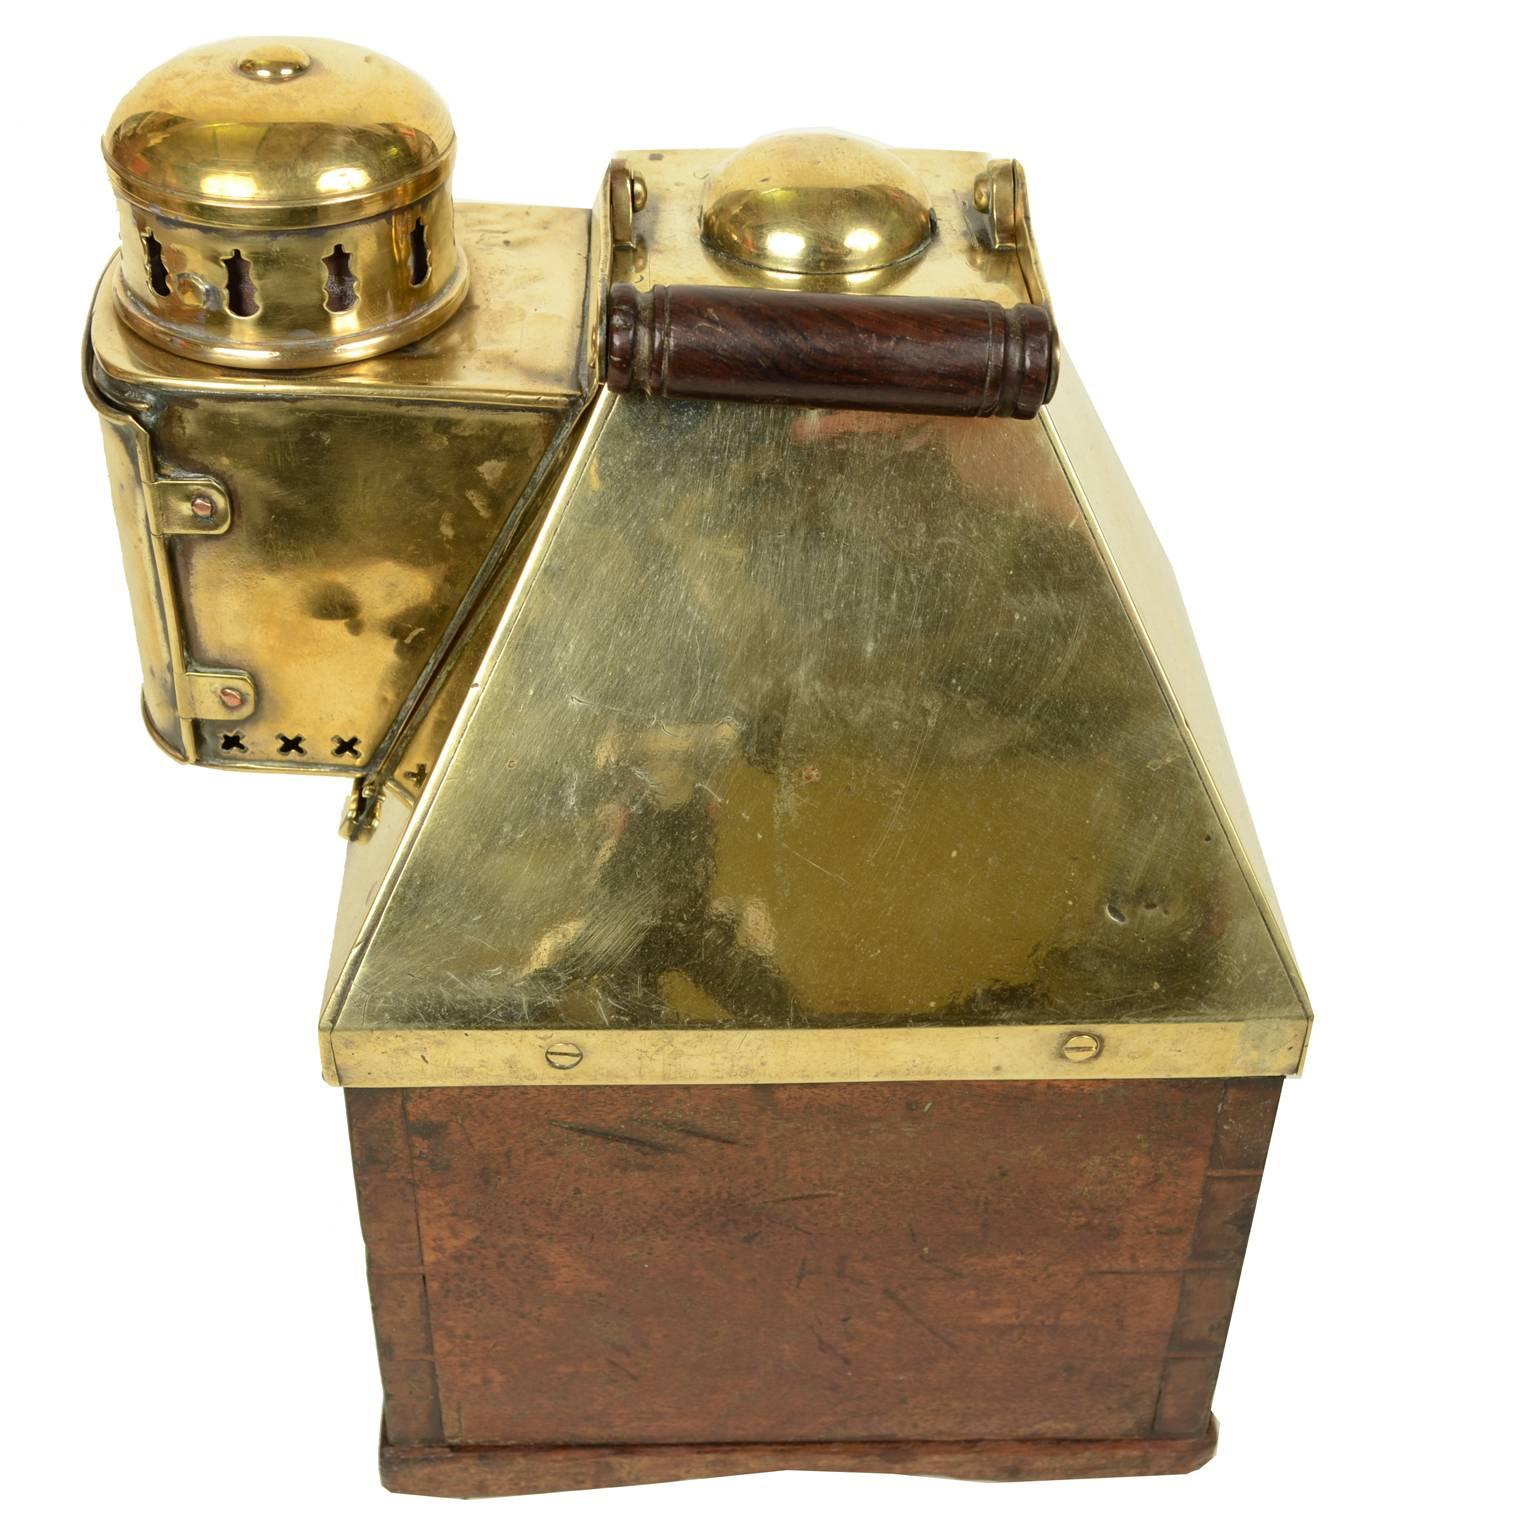 British Binnacle Compass Mahogany and Brass End of the 19th century